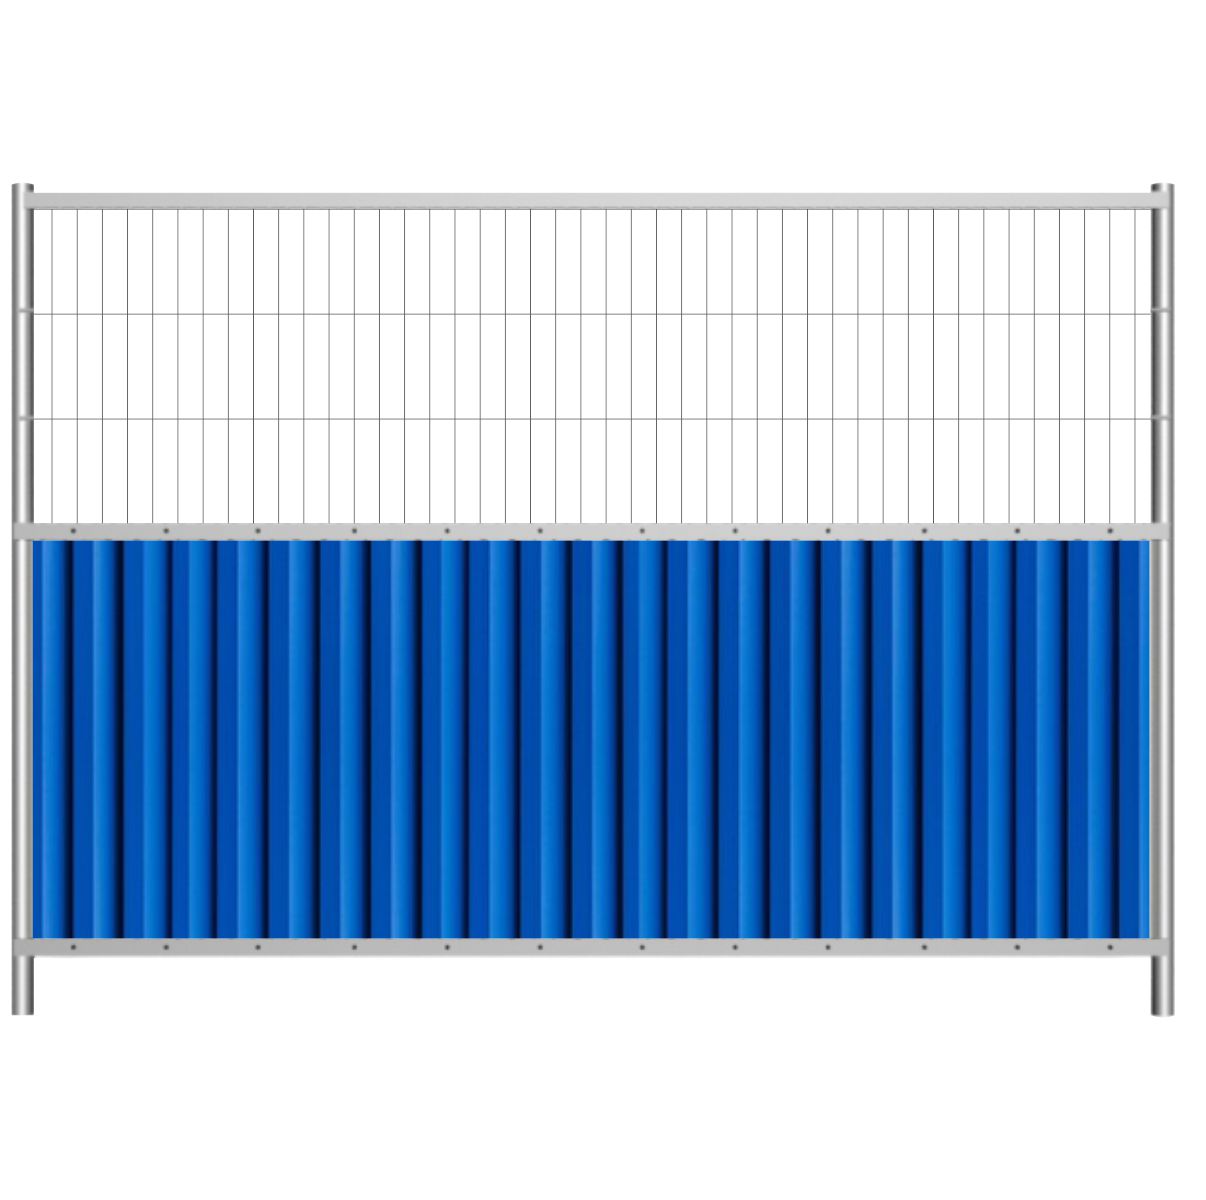 Panel-Polpelny-23m-kolor-niebieski-Panel-System-Grpup-1